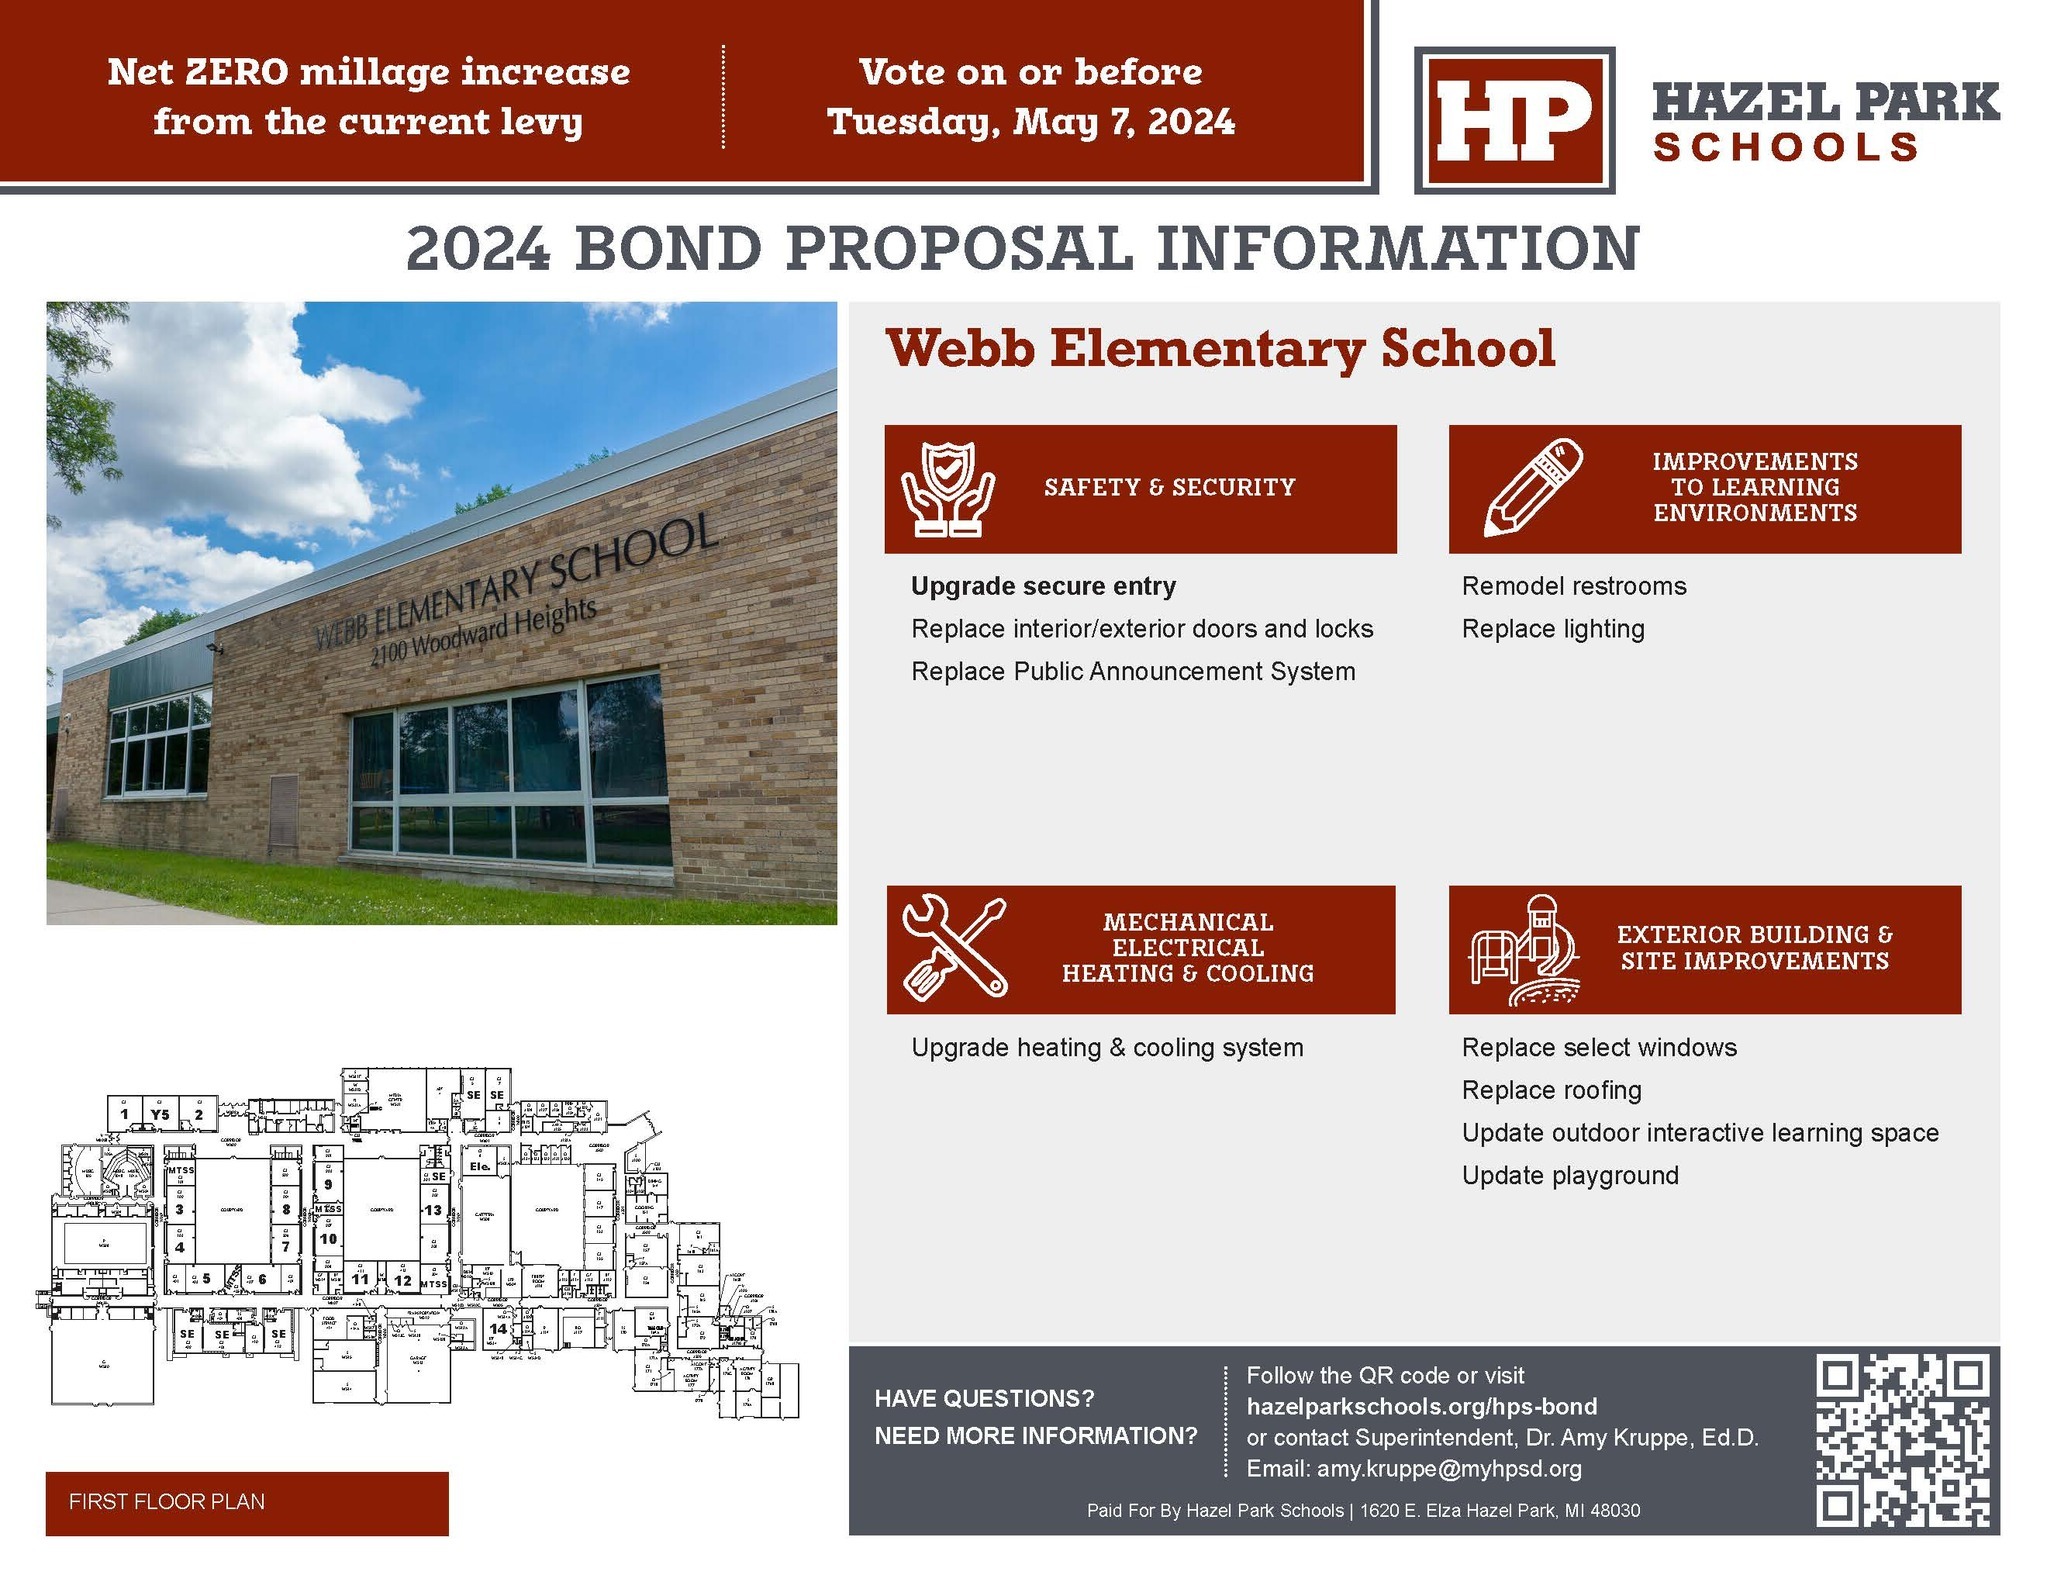 Webb Elementary Bond Proposal Information